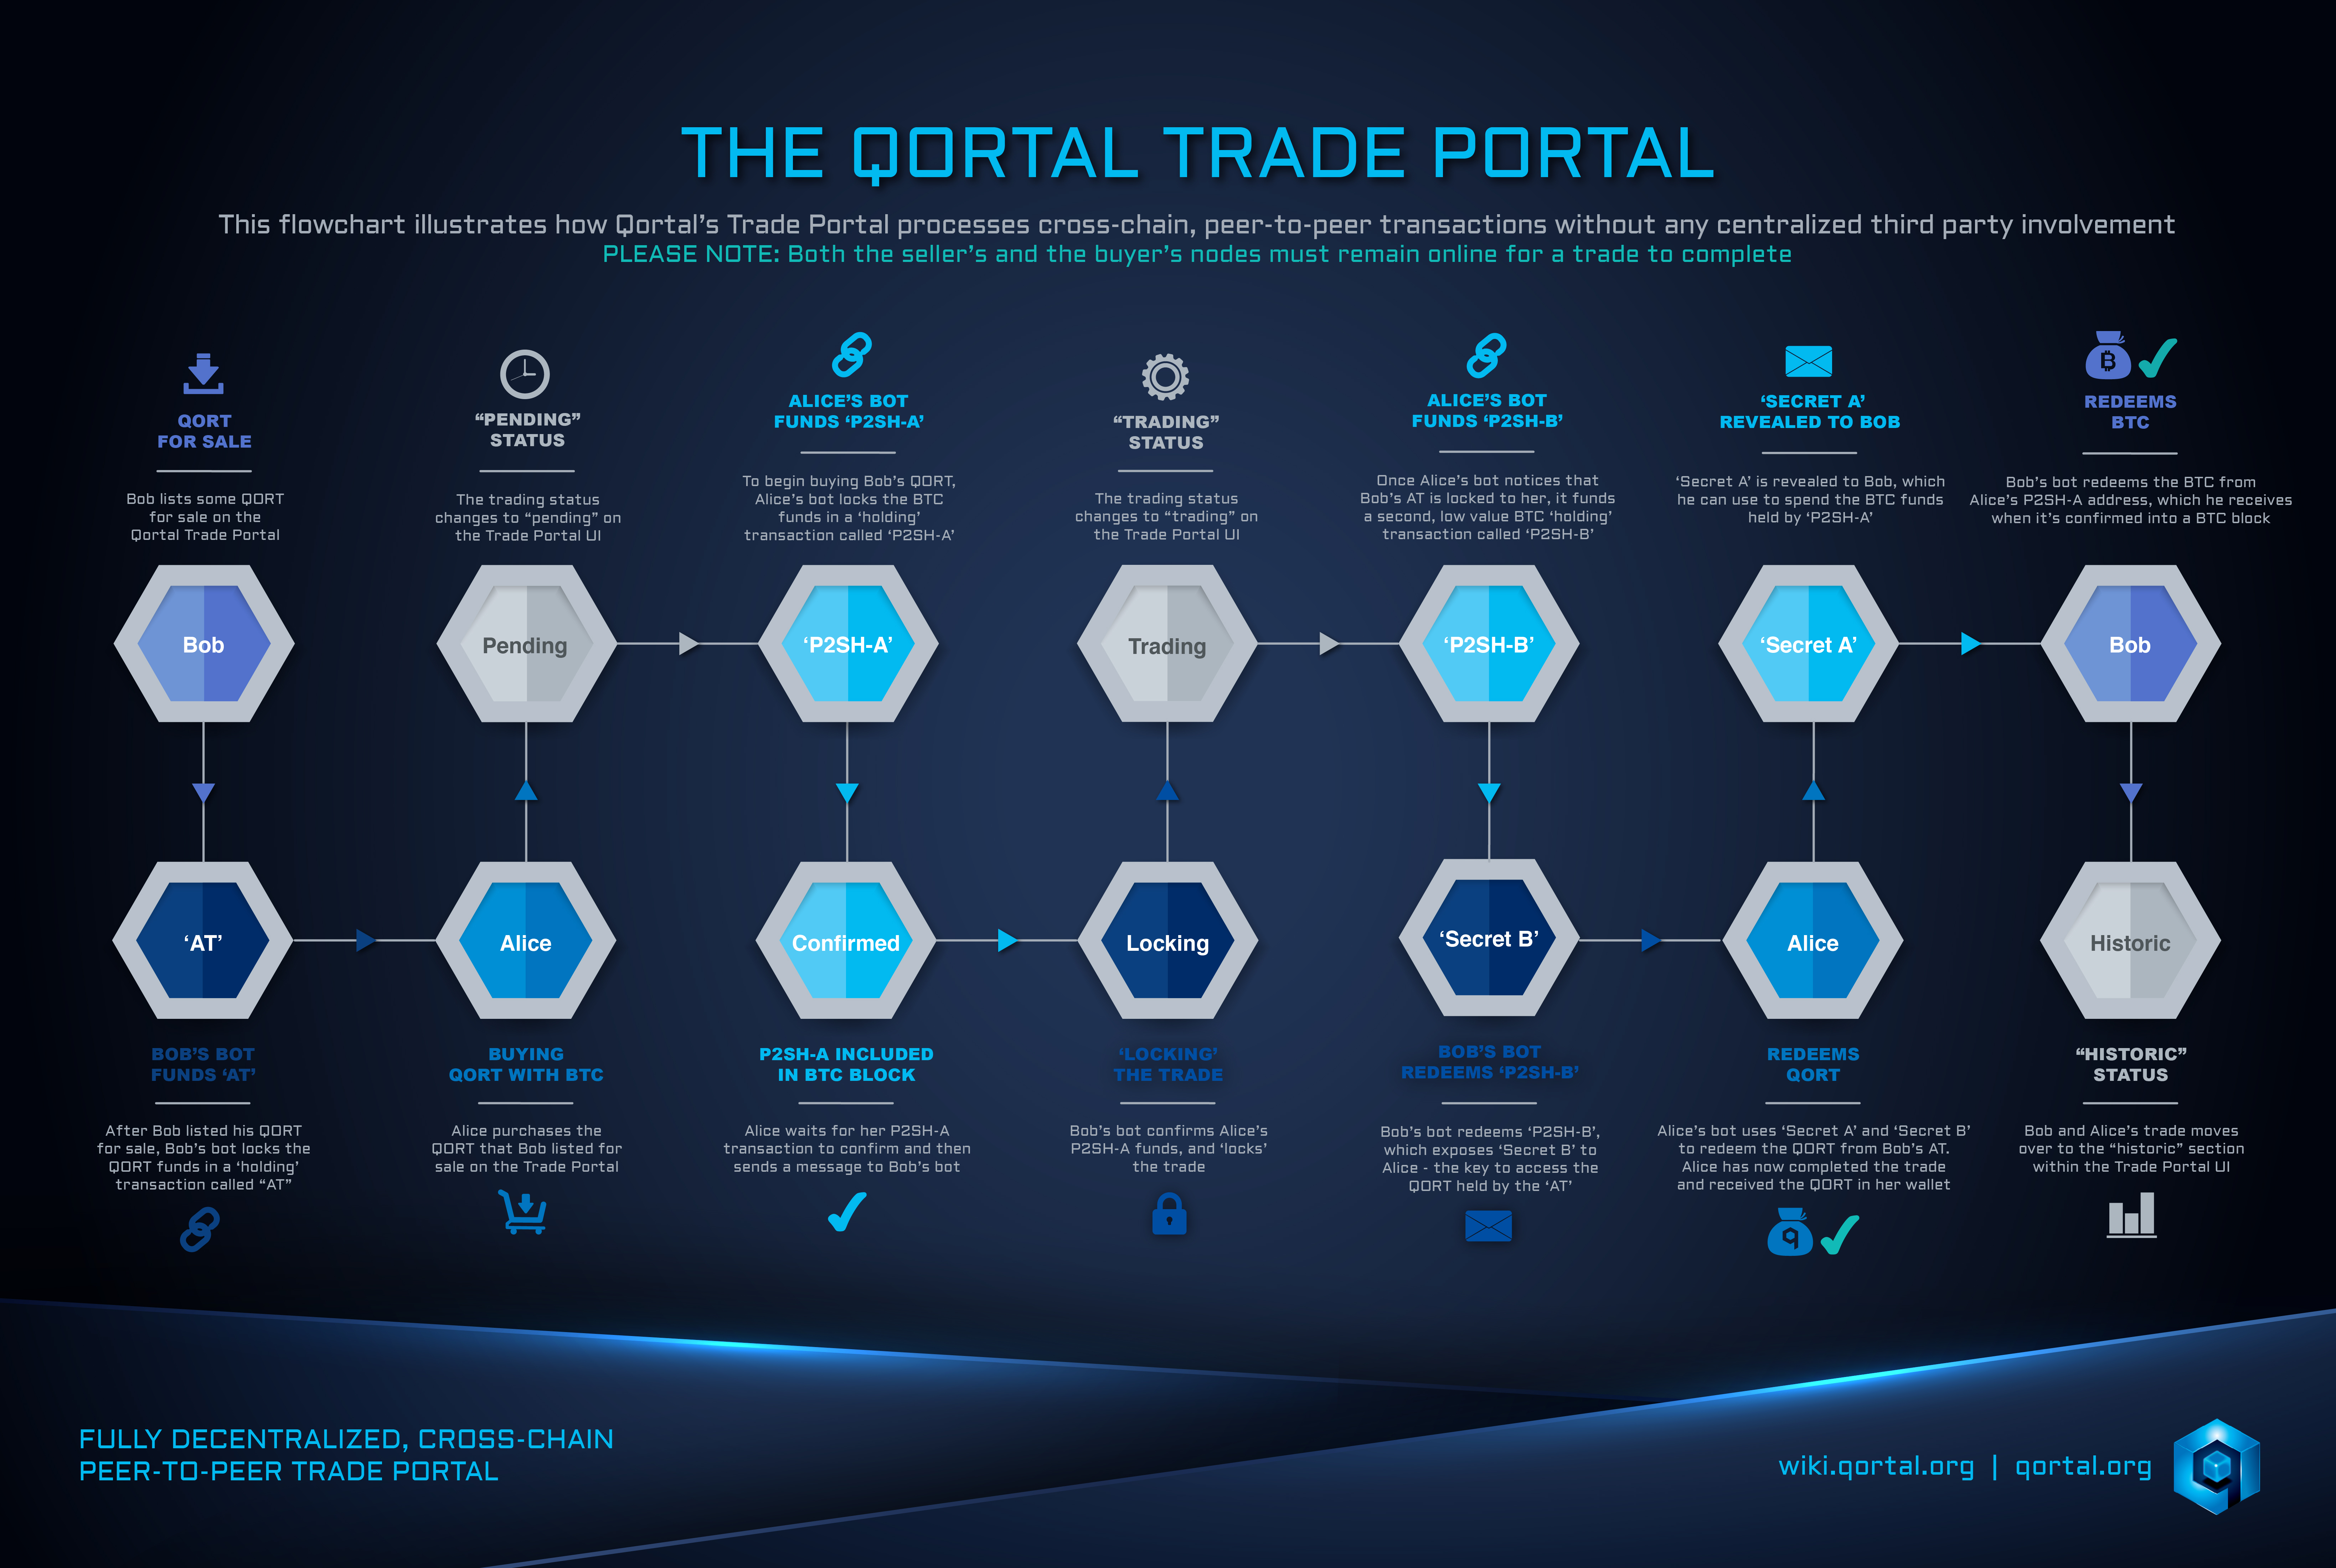 qortal_trading_portal_infographic_2020_english.jpg